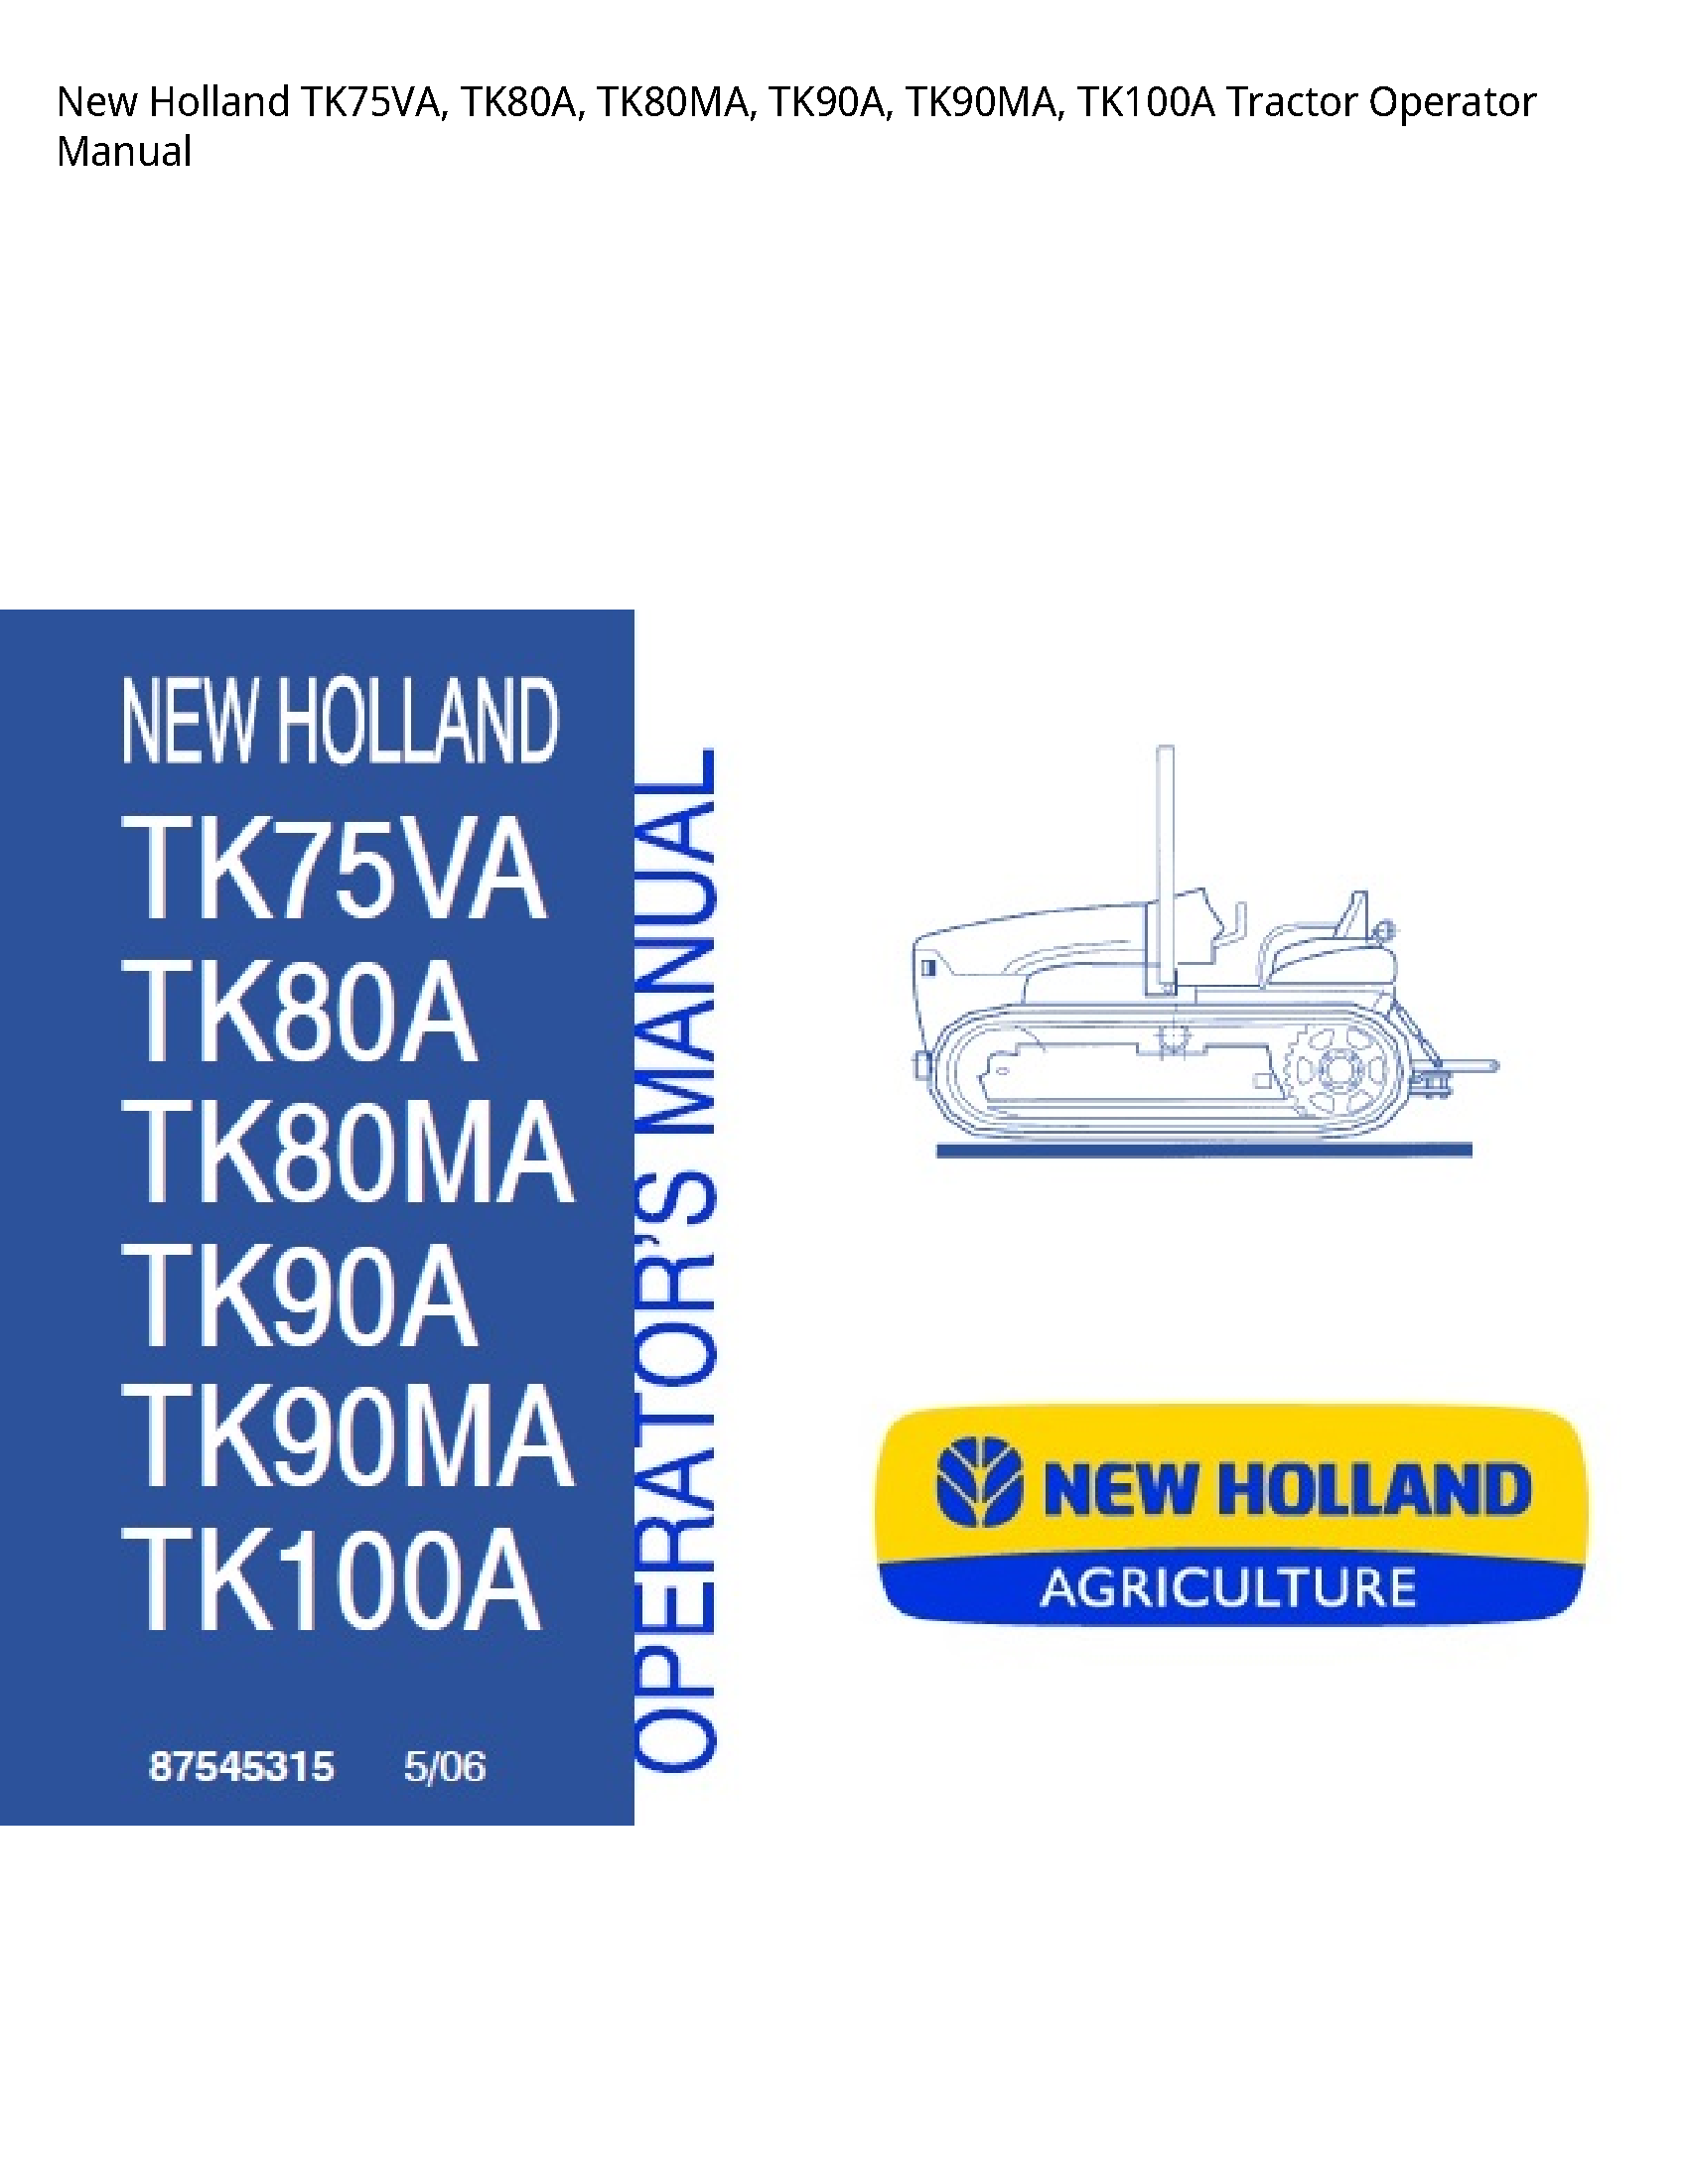 New Holland TK75VA Tractor Operator manual